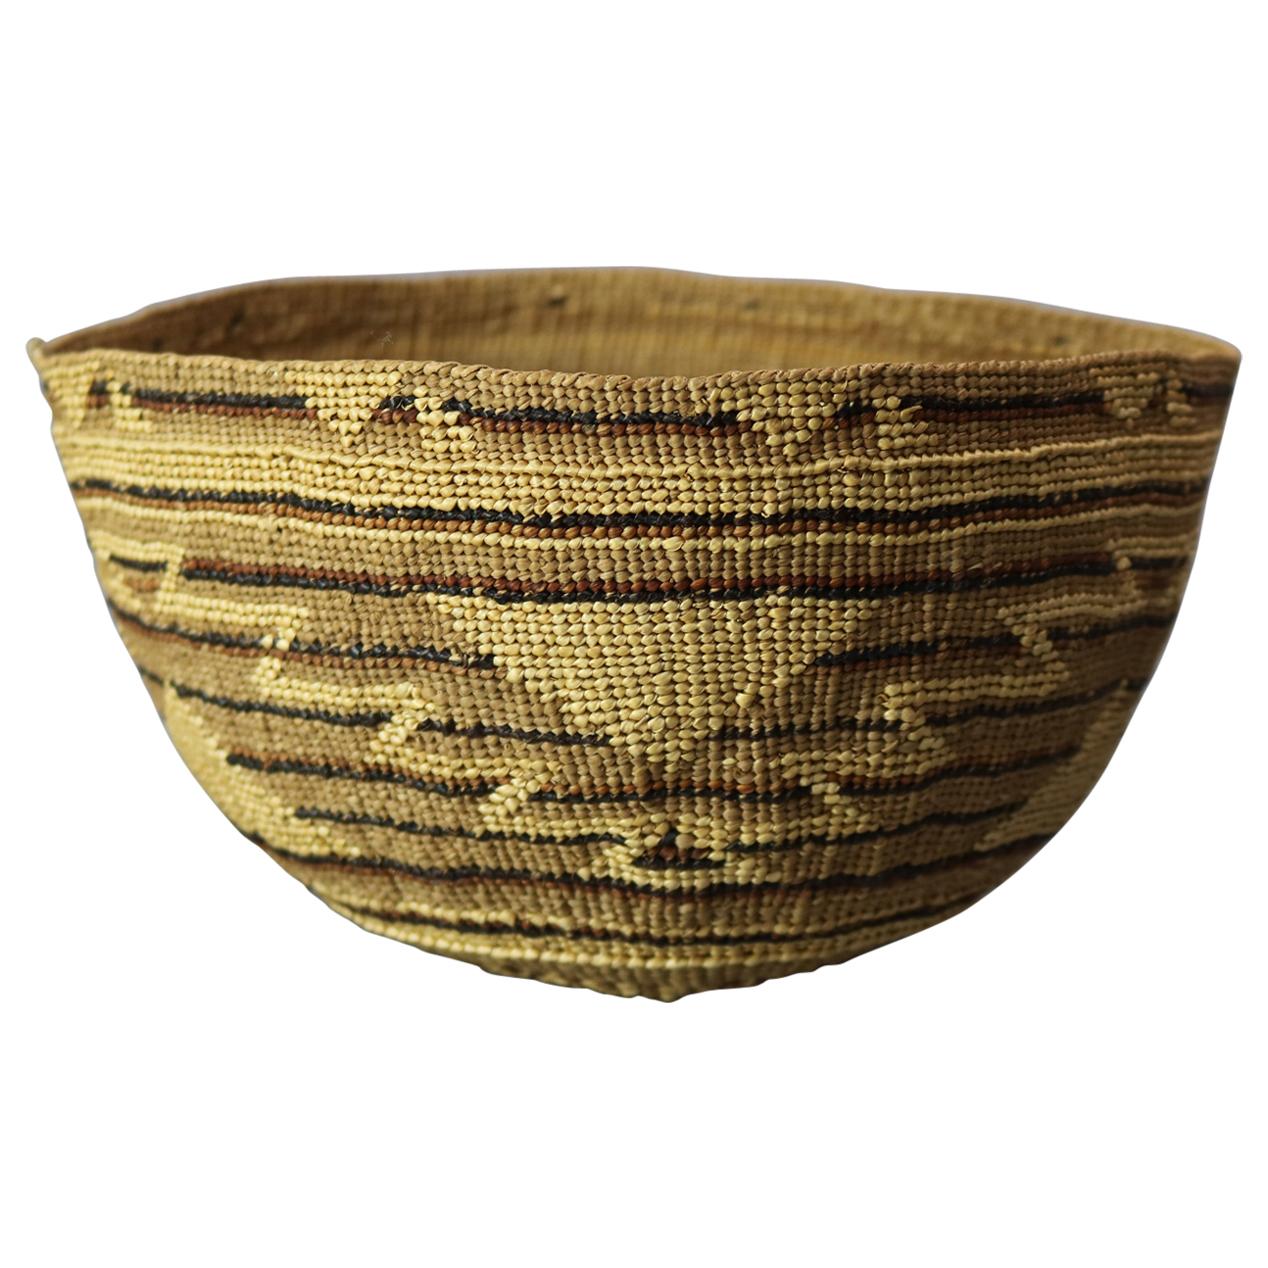 Antique Southwest Native American Indian Pima Basket, circa 1920